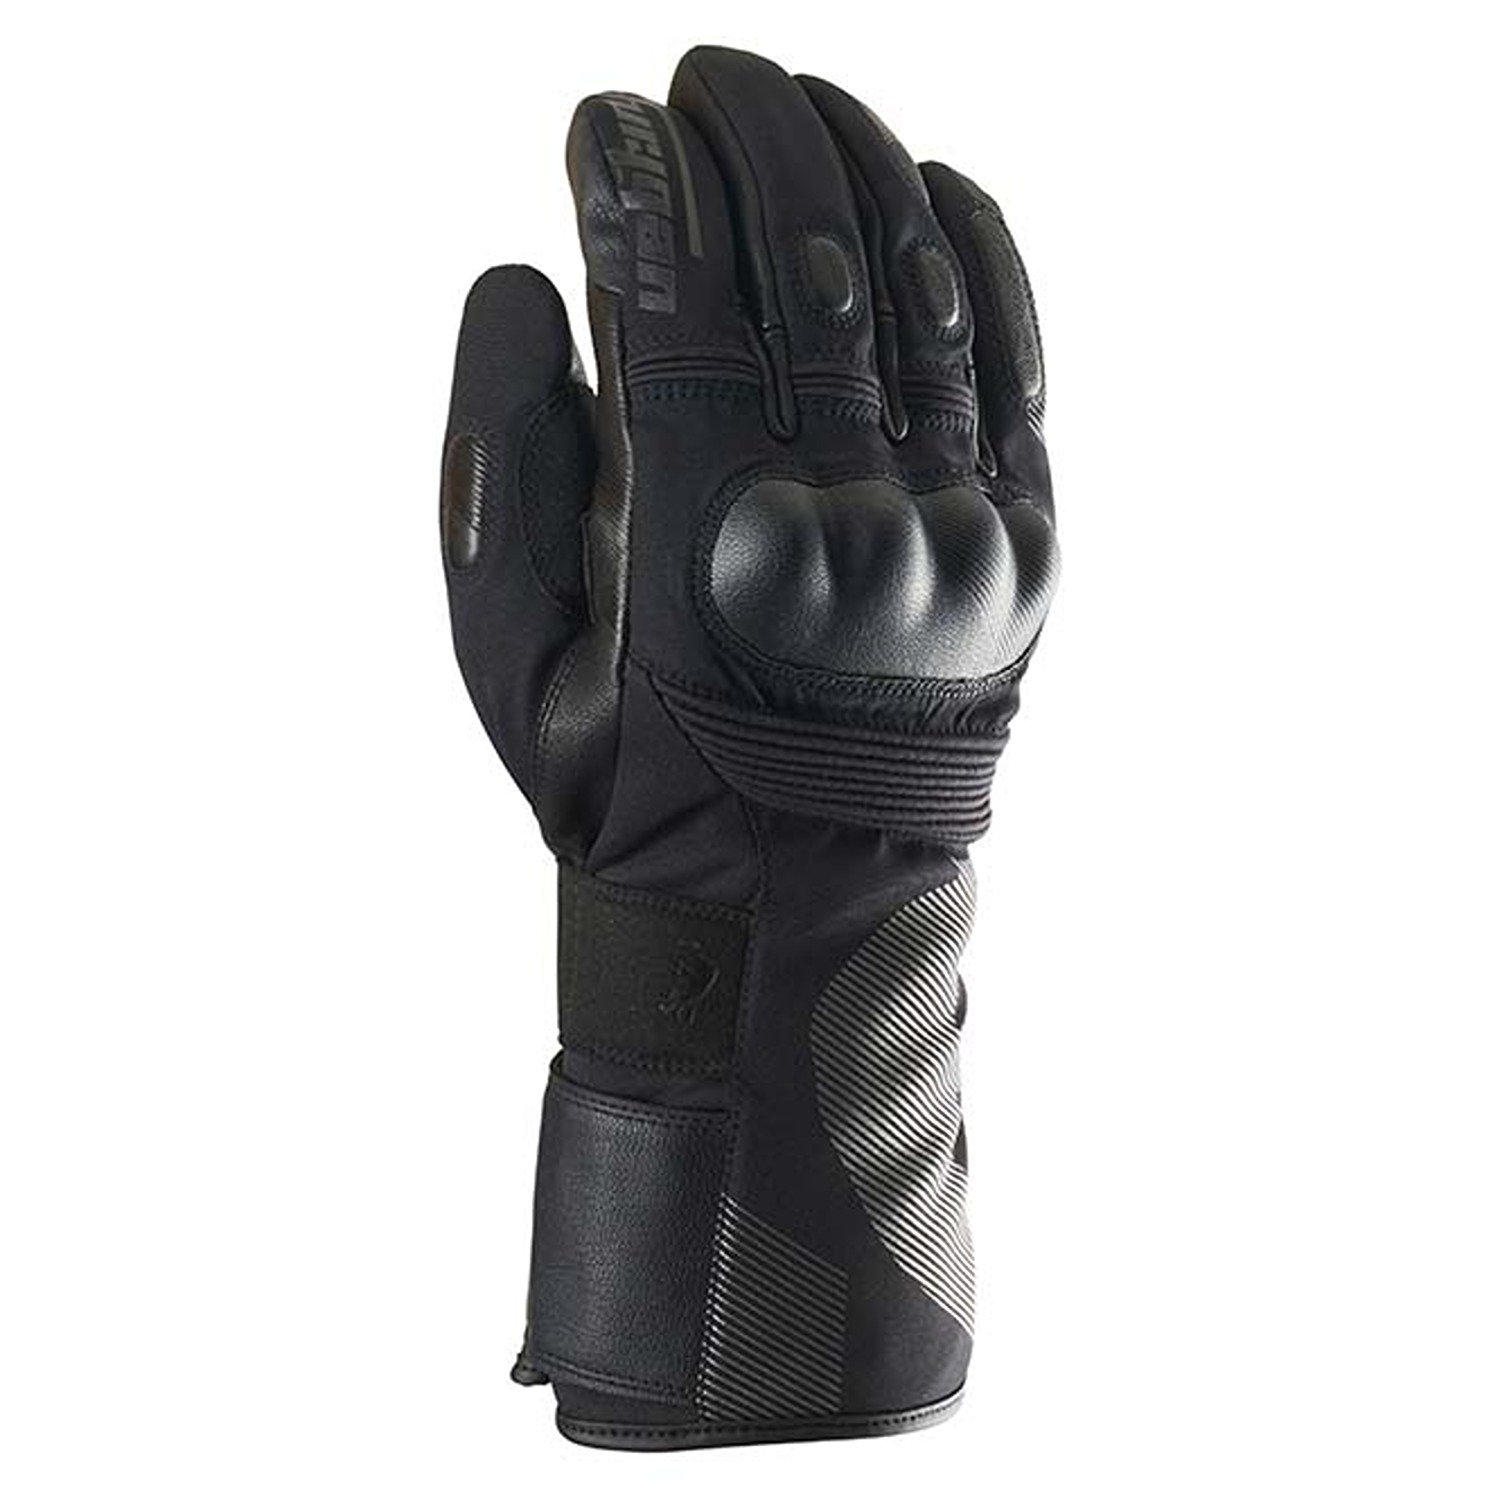 Image of Furygan Watts 375 Gloves Black Size 2XL ID 3435980358242